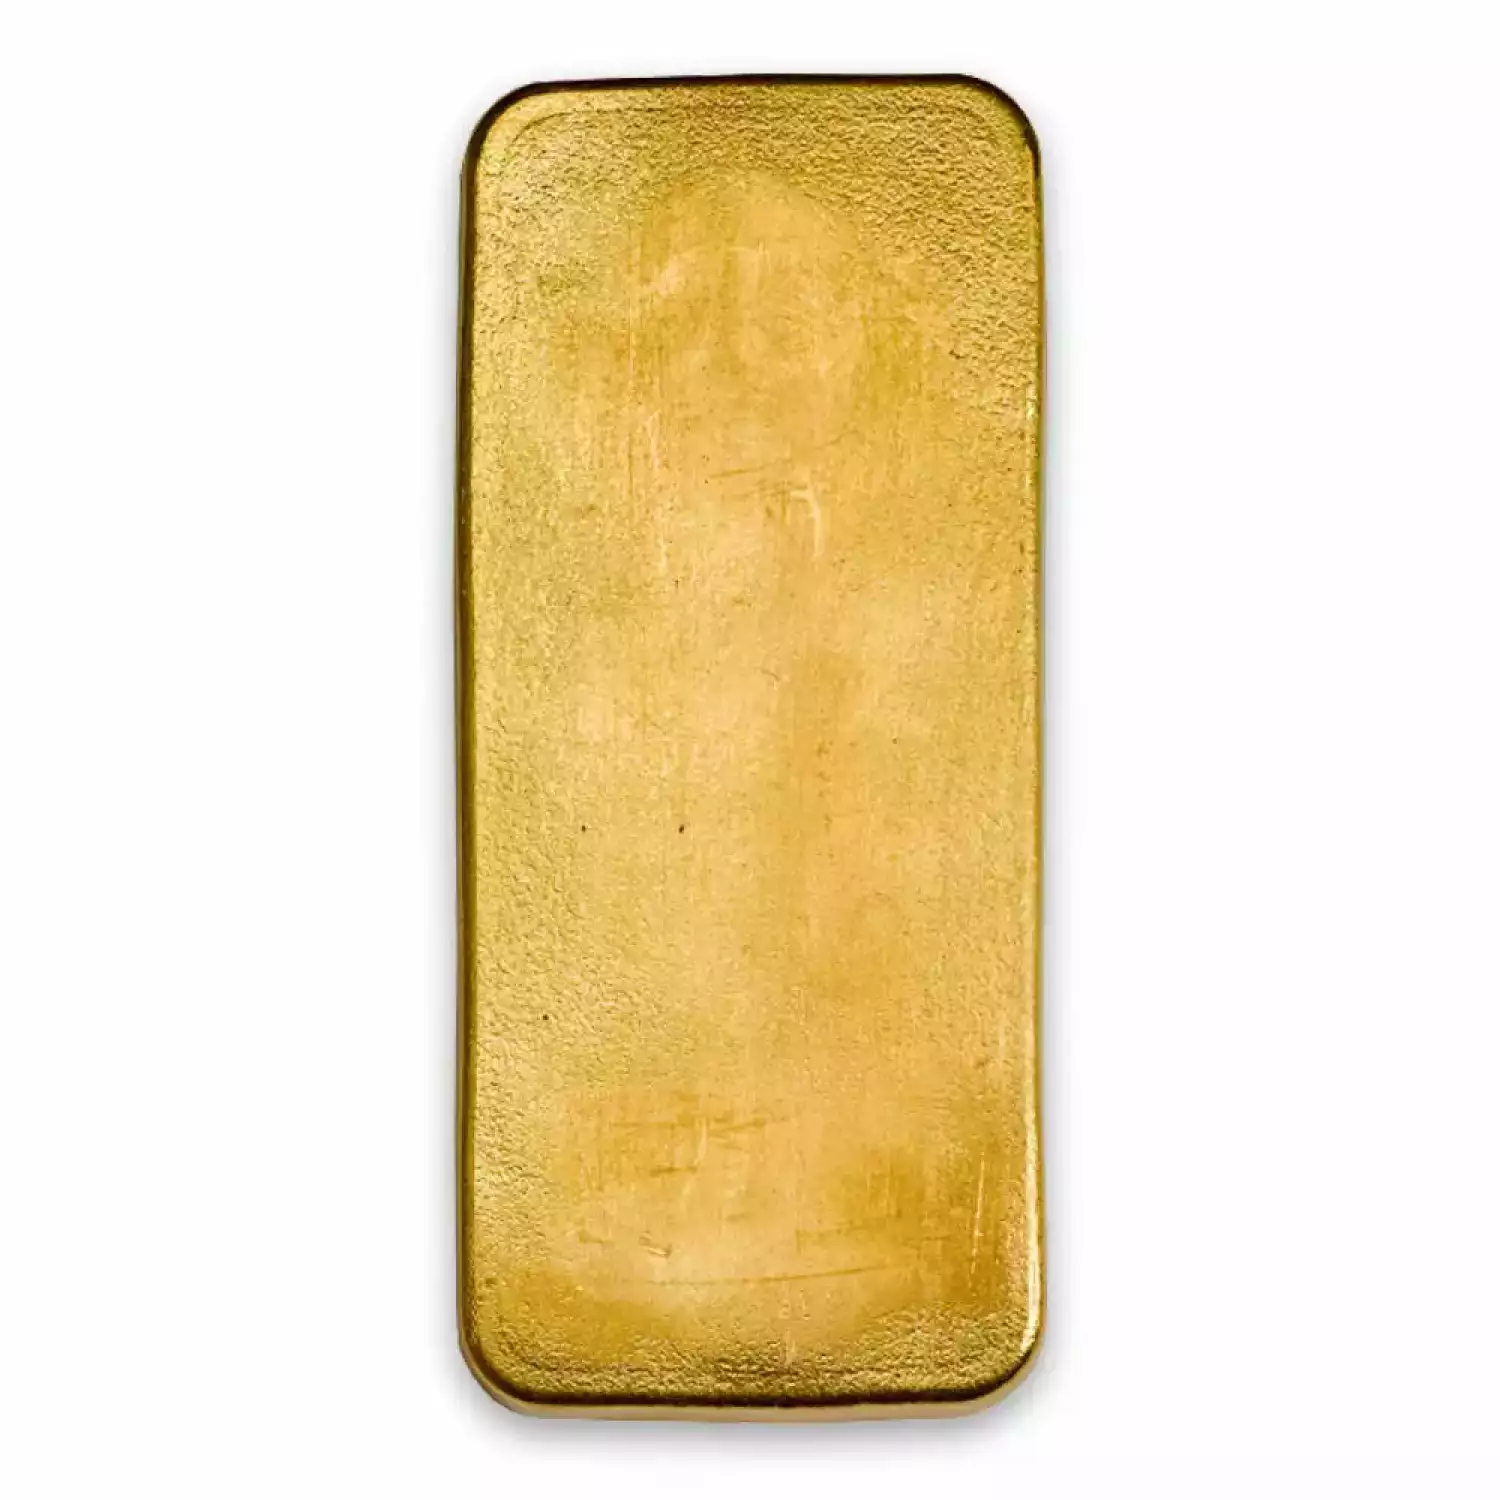 1kg Royal Mint Refinery Cast Gold Bar (3)